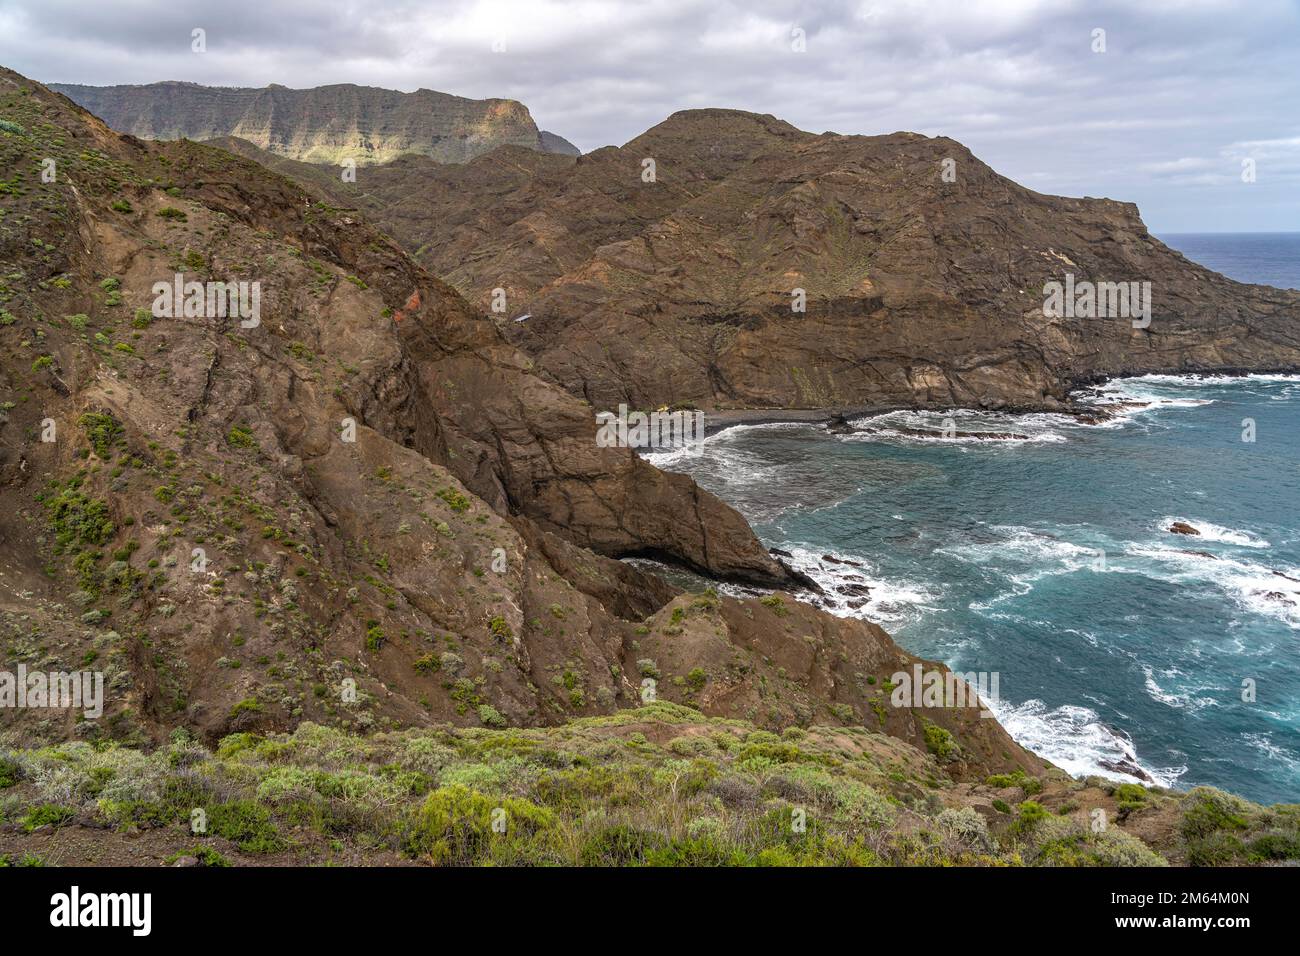 Die felsige Kueste und der Strand Playa de la Caleta BEI Hermigua, la Gomera, Kanarische Inseln, Spanien | côte rocheuse et plage de la Caleta Banque D'Images